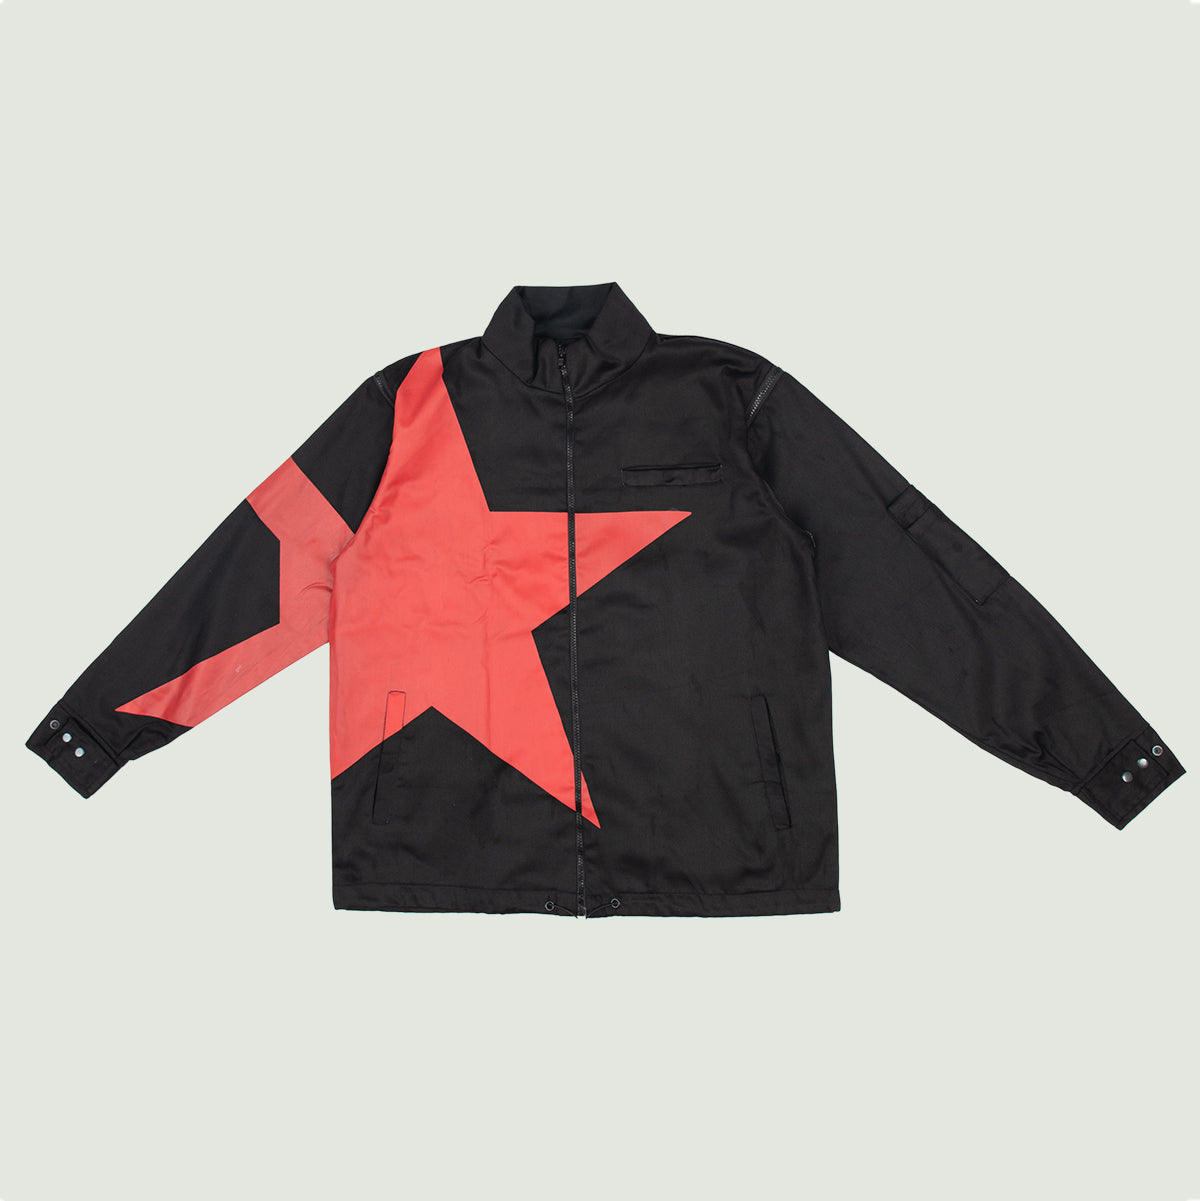 Militia Black/Red star jacket